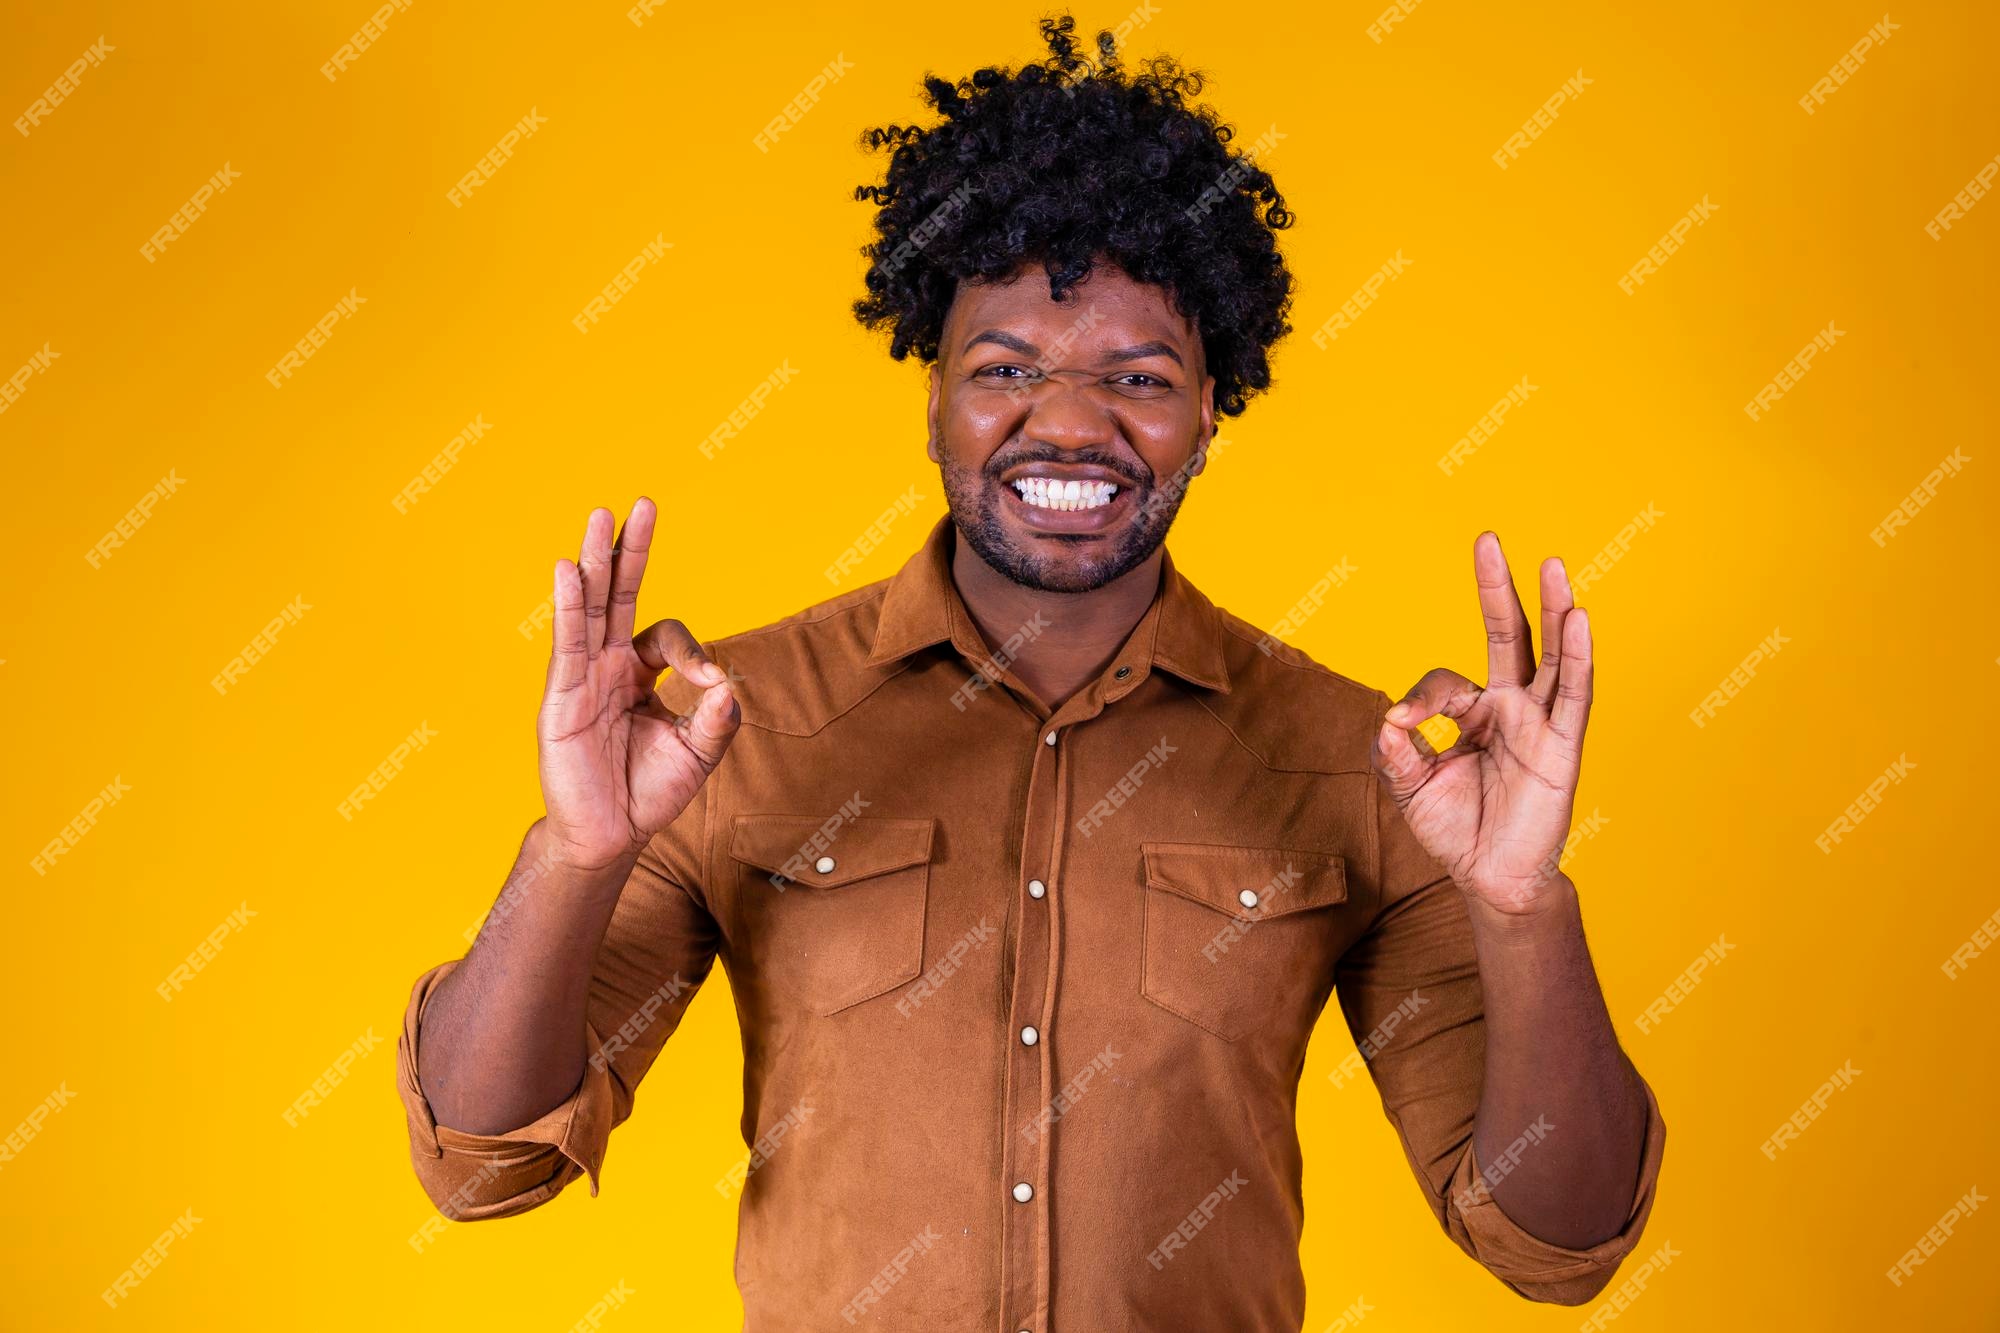 portrait-happy-black-man-showing-ok-sign-smiling-yellow-background_432566-11310.jpg